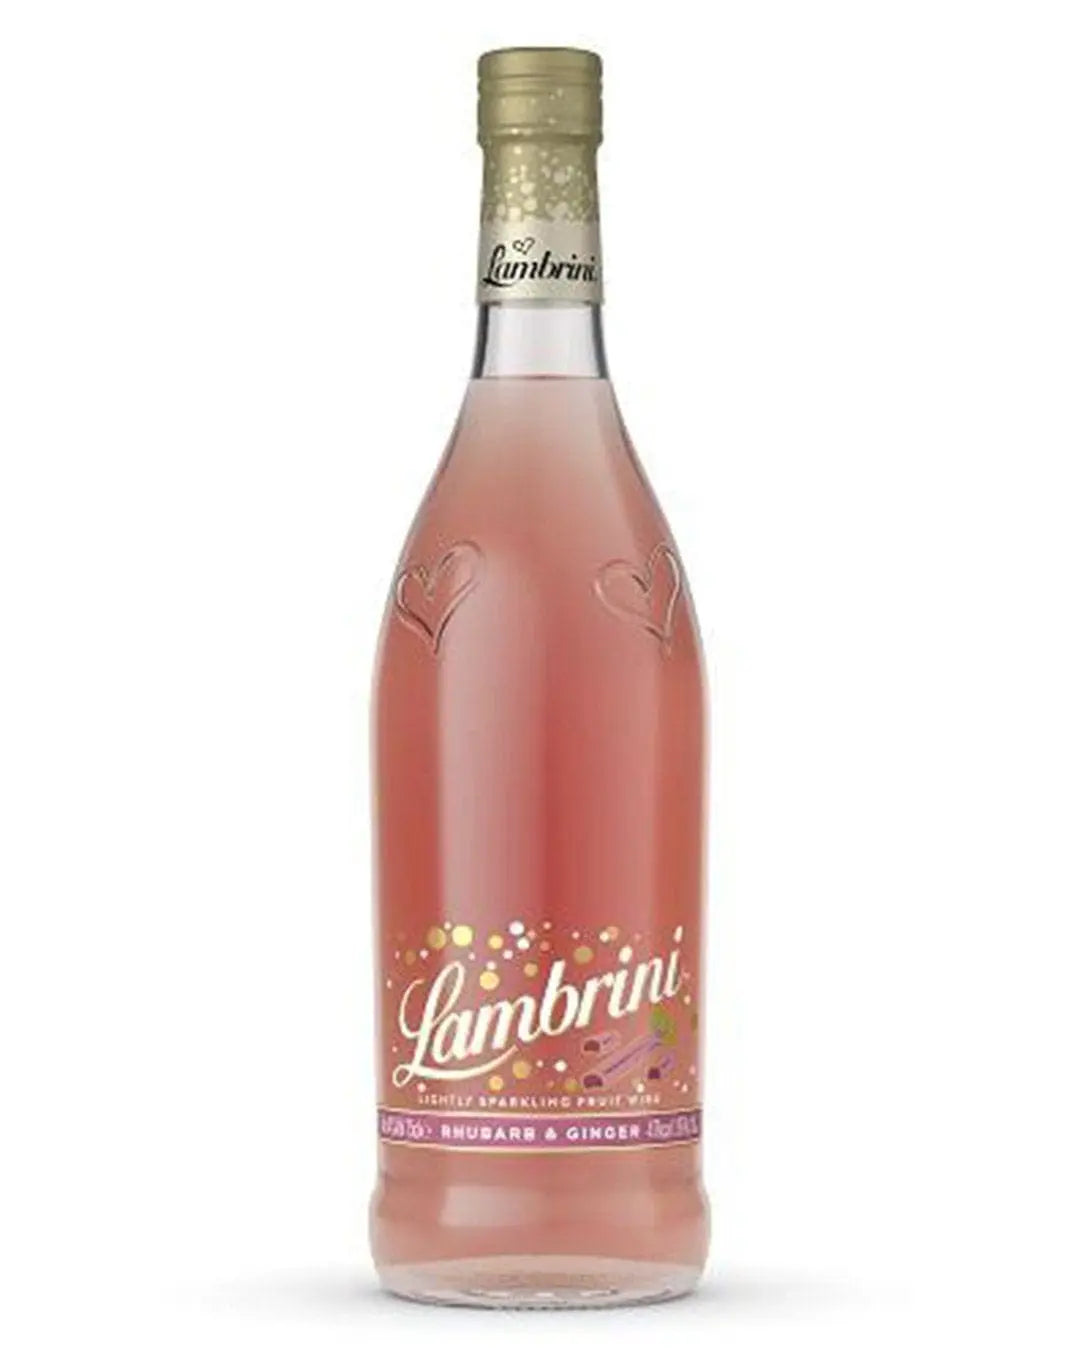 Lambrini Rhubarb & Ginger Slightly Sparkling Fruit Wine, 75 cl Champagne & Sparkling